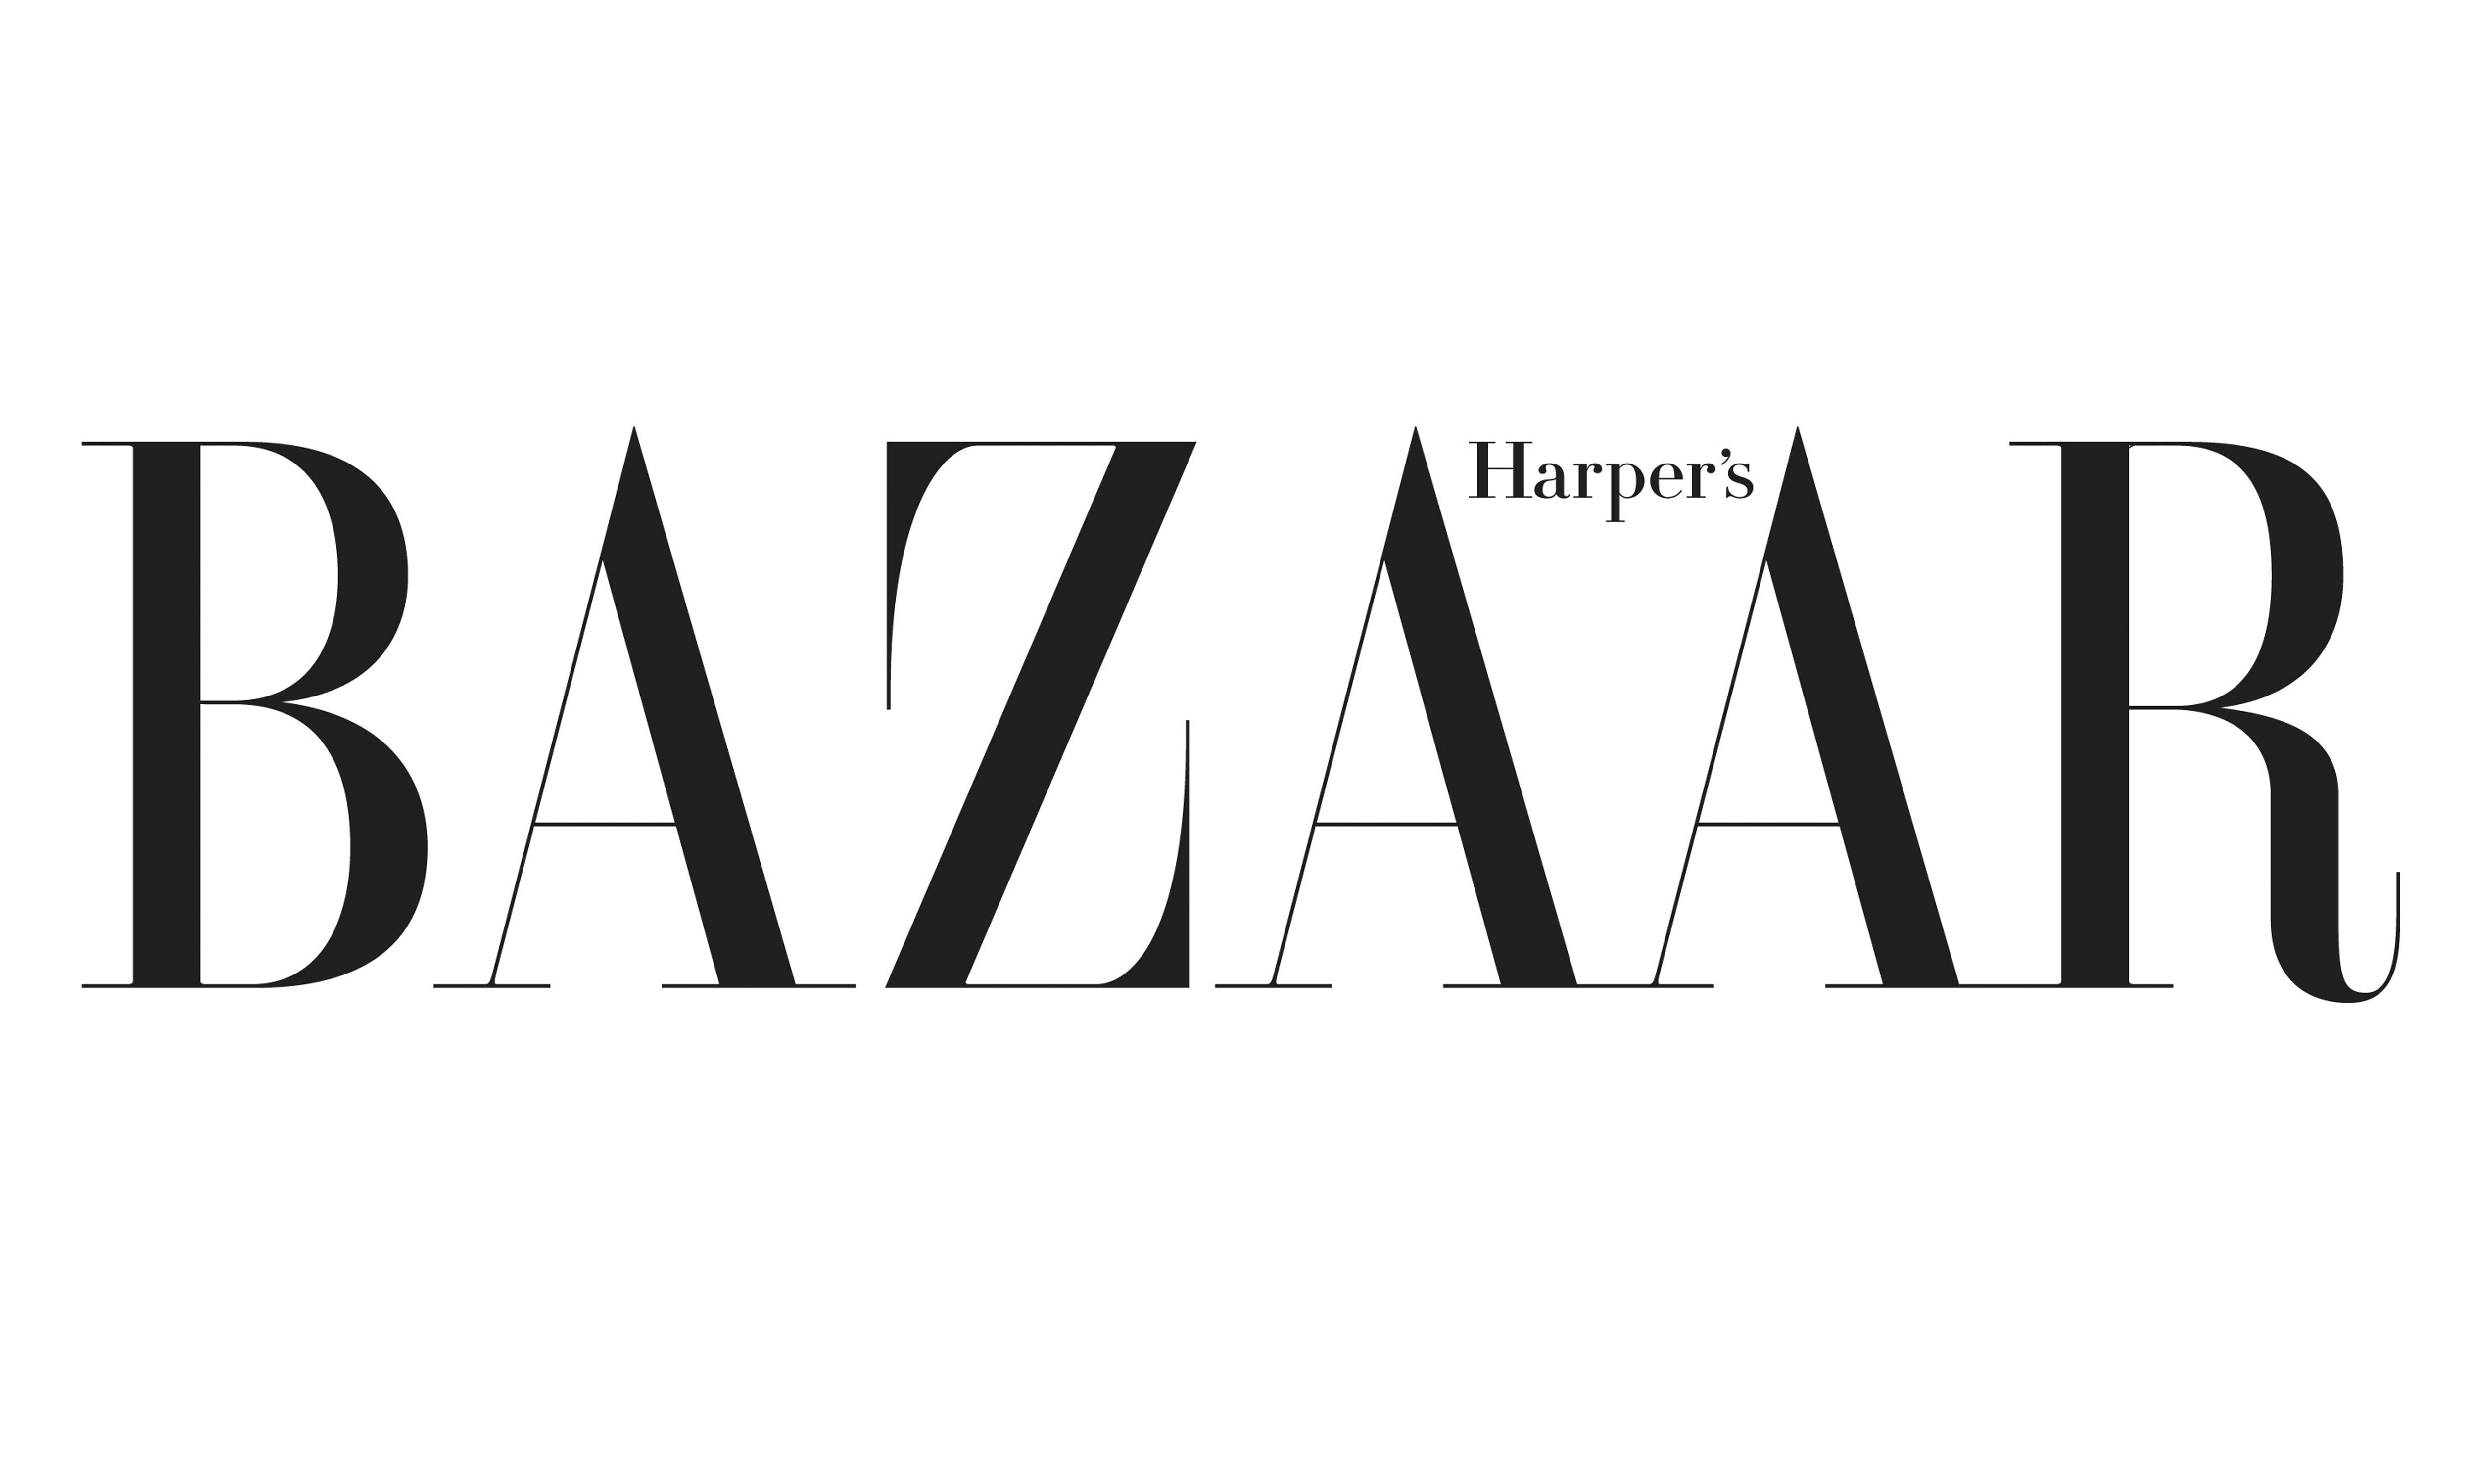 harpers bazaar logo for butterfly books website